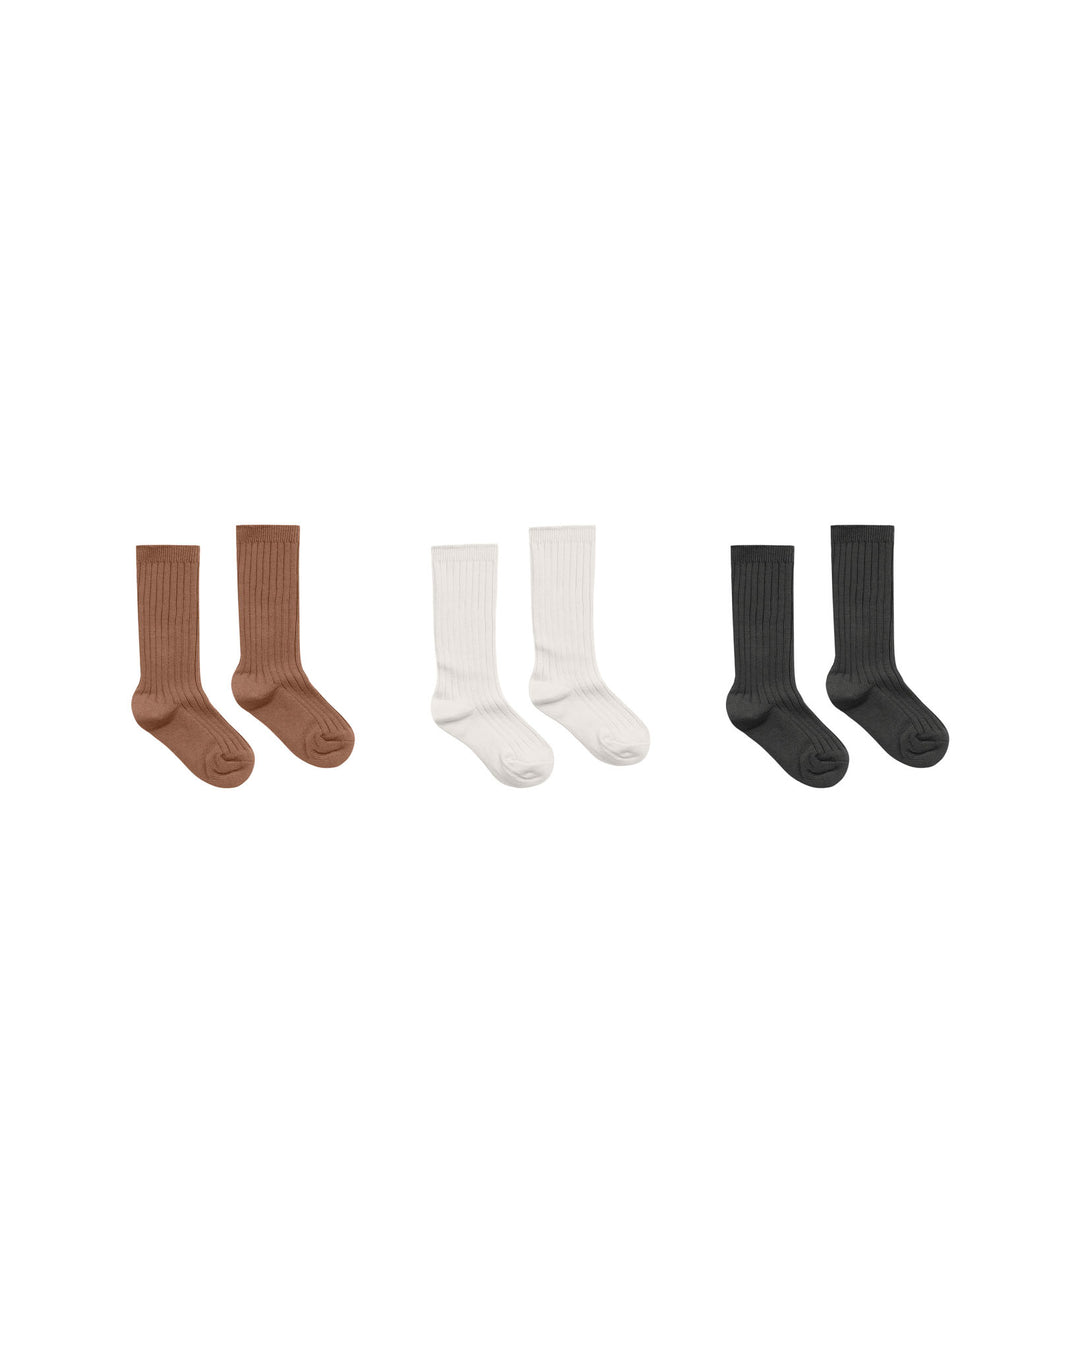 Rylee + Cru Ribbed Socks Set - Cedar, Ivory and Black |Mockingbird Baby & Kids